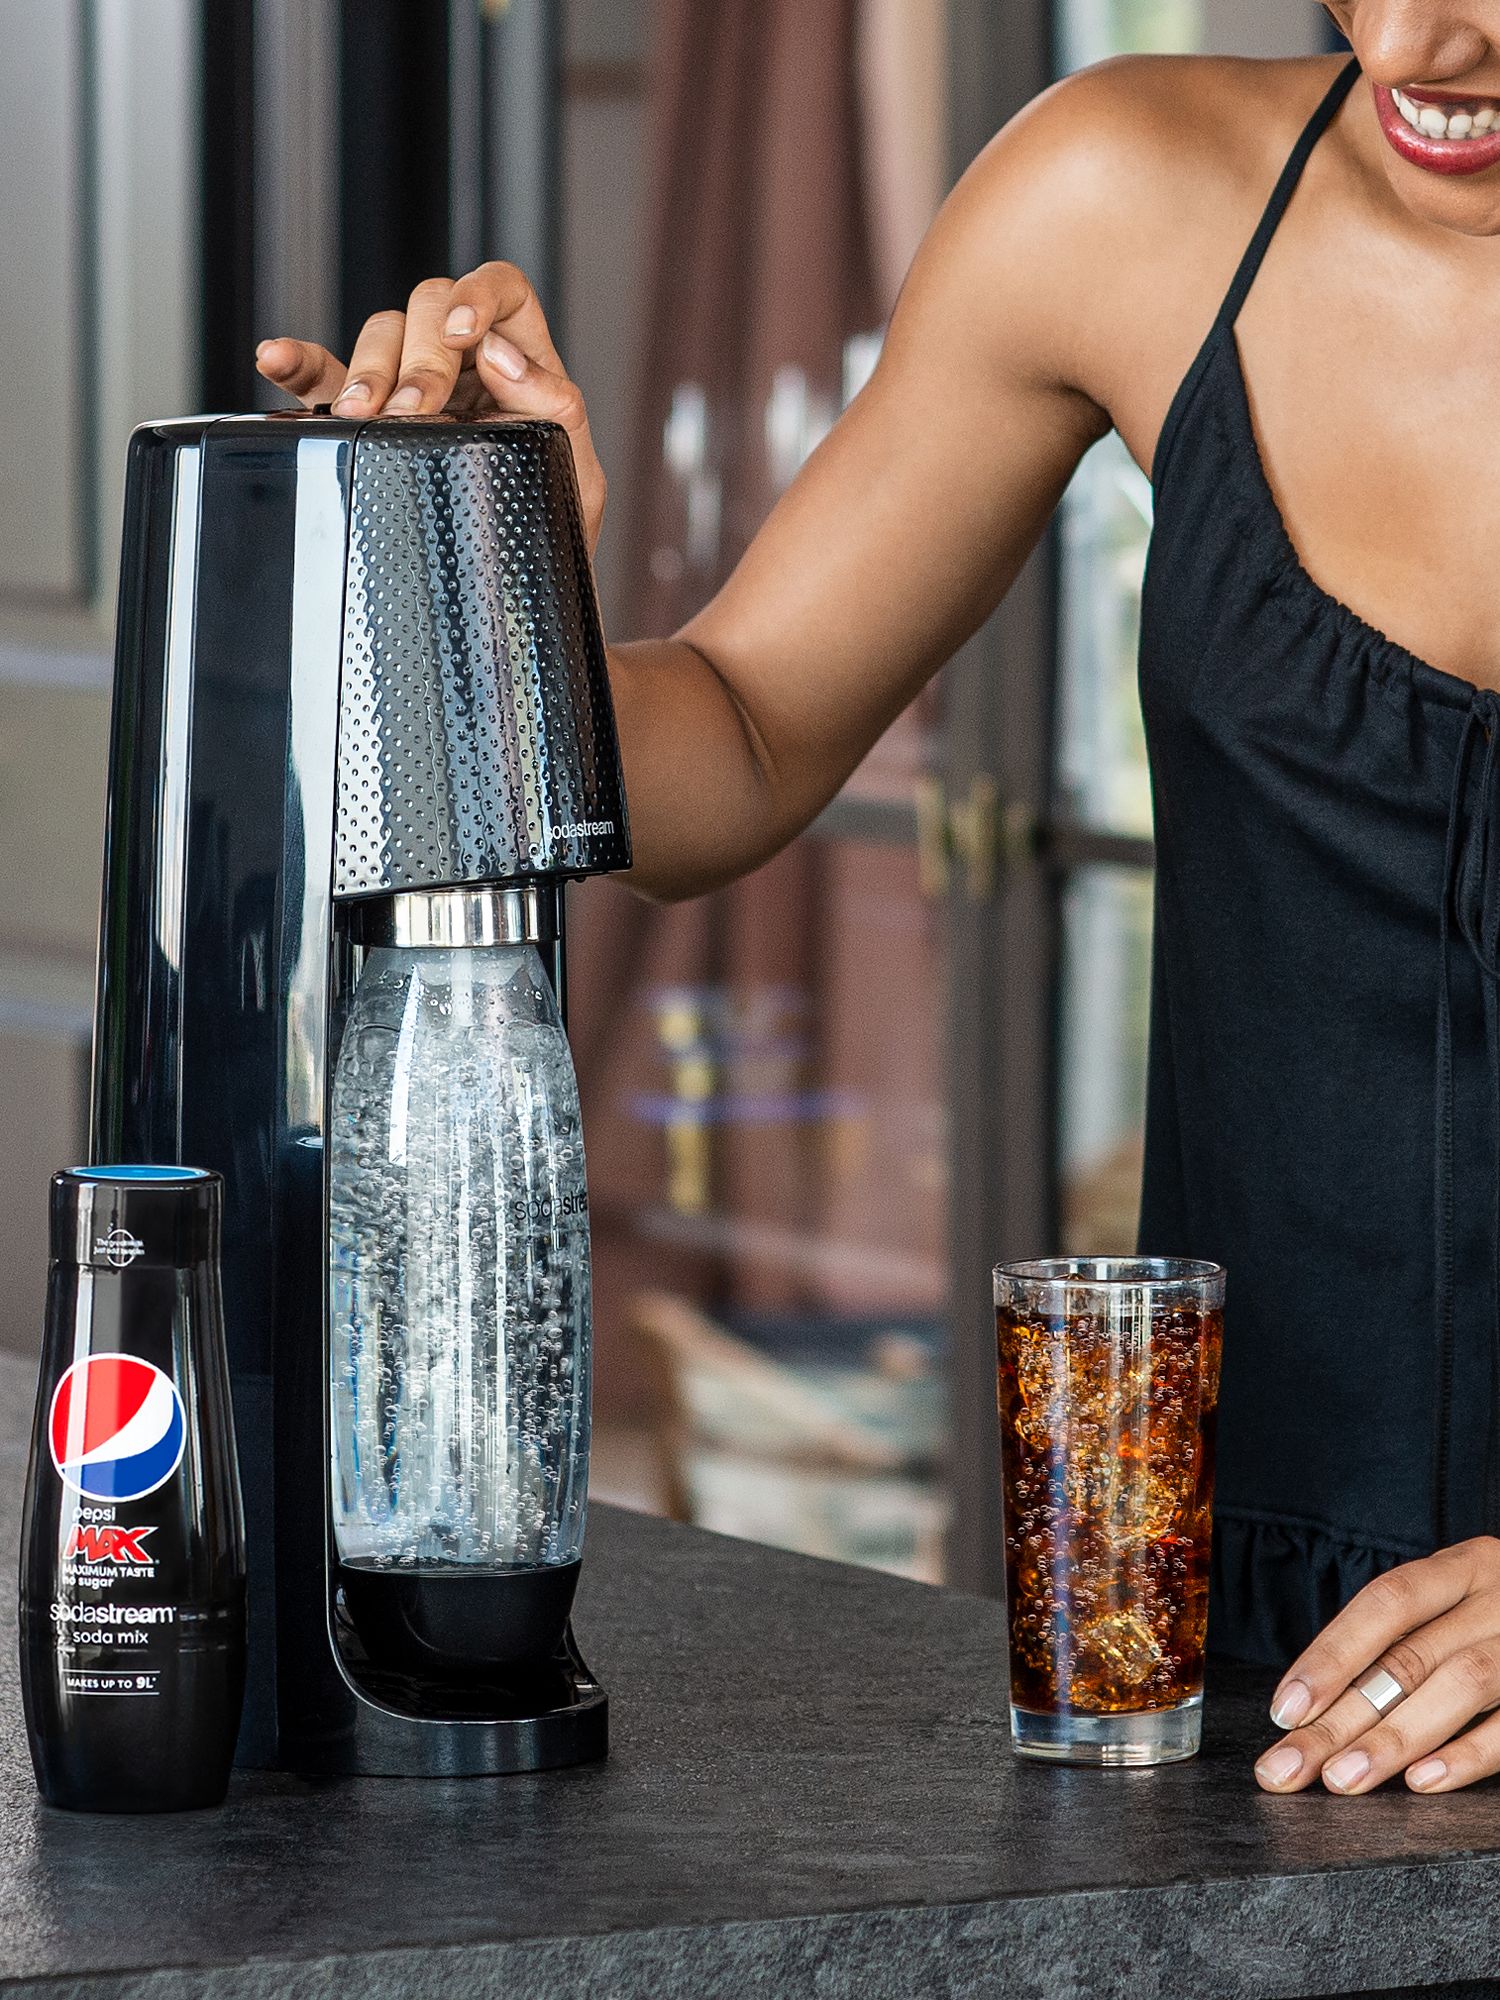 SodaStream Pepsi MAX Sparkling Drink 440ml